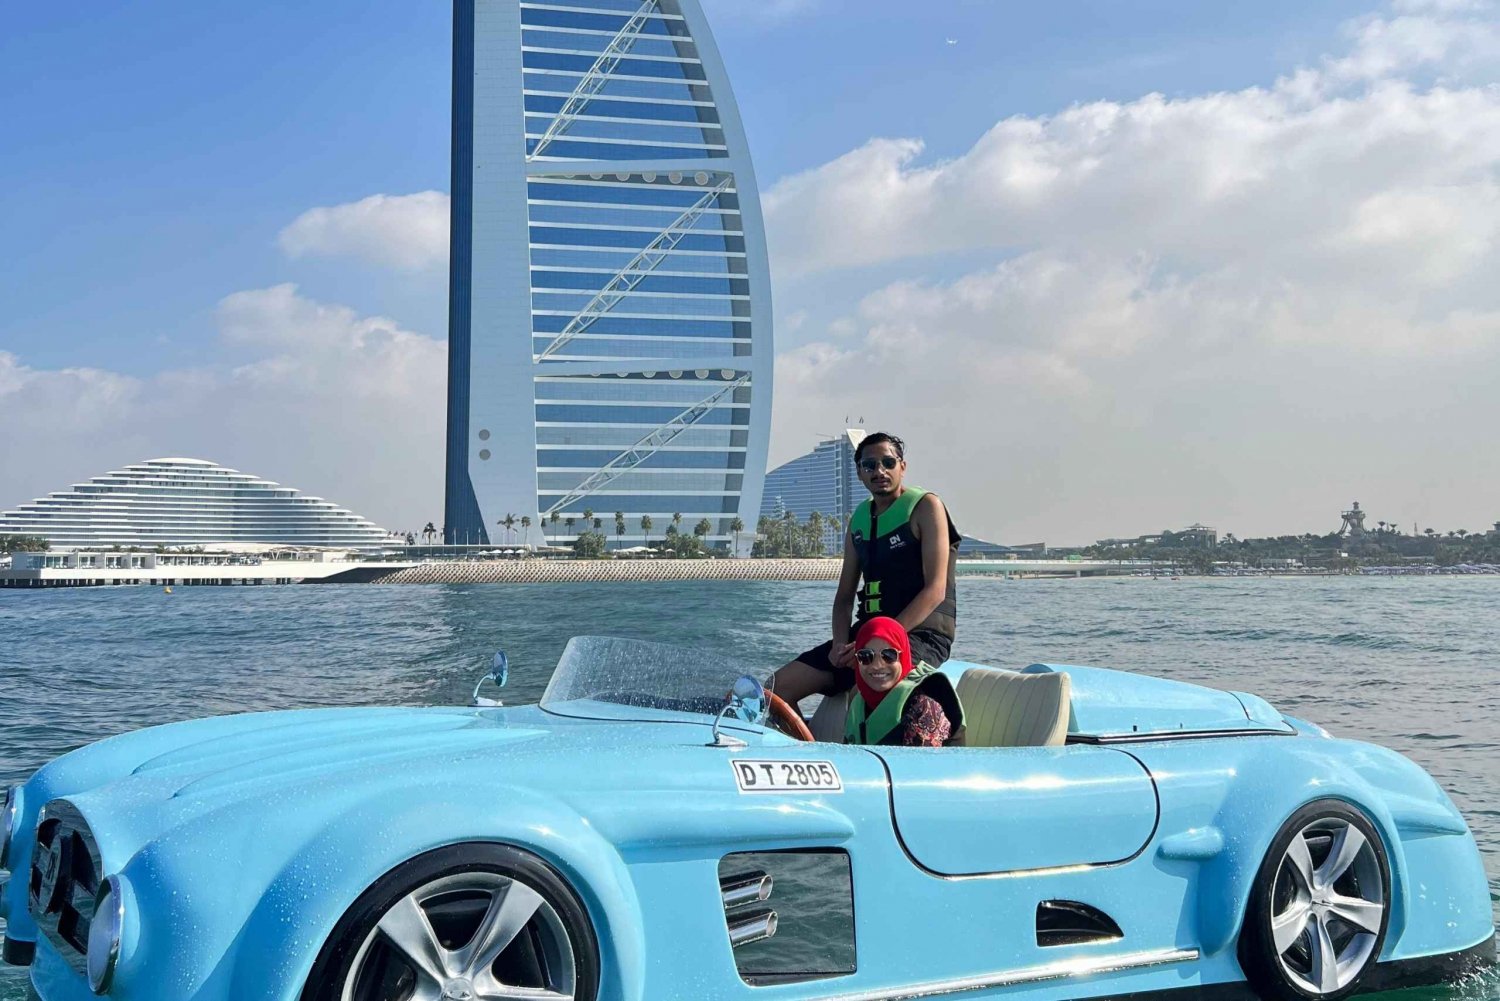 DUBAI: LUXURY JETCAR 4 SEATS EXPLORE BURJ AL ARAB IN STYLE!